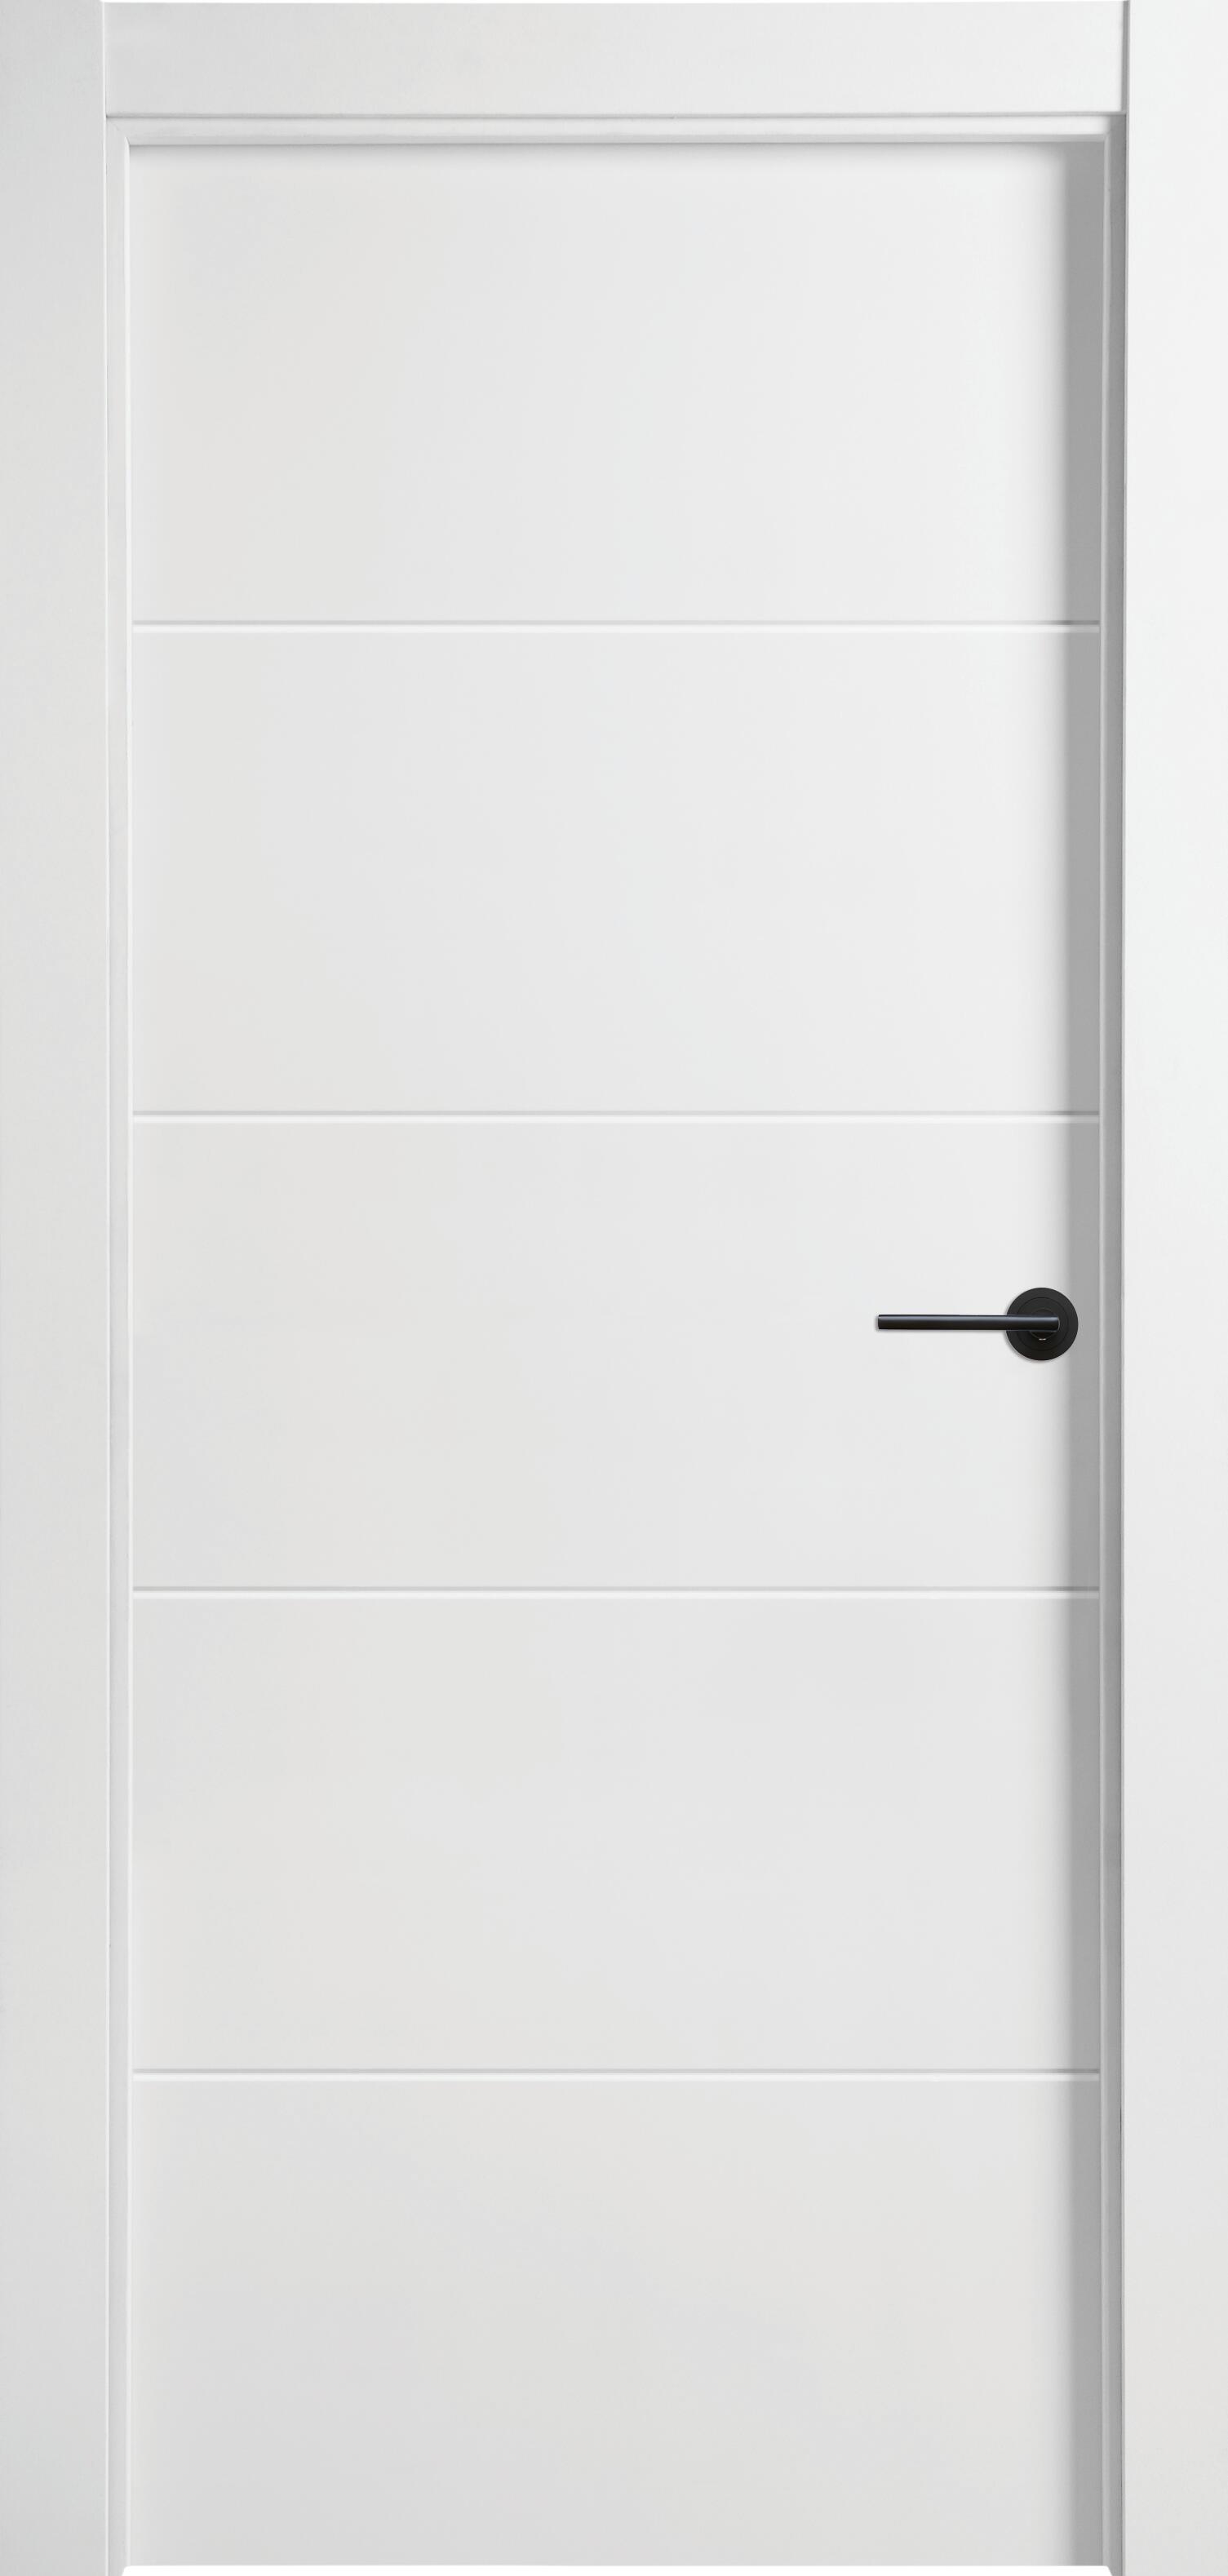 Puerta lucerna plus black blanco de apertura izquierda de 9x92.5 cm